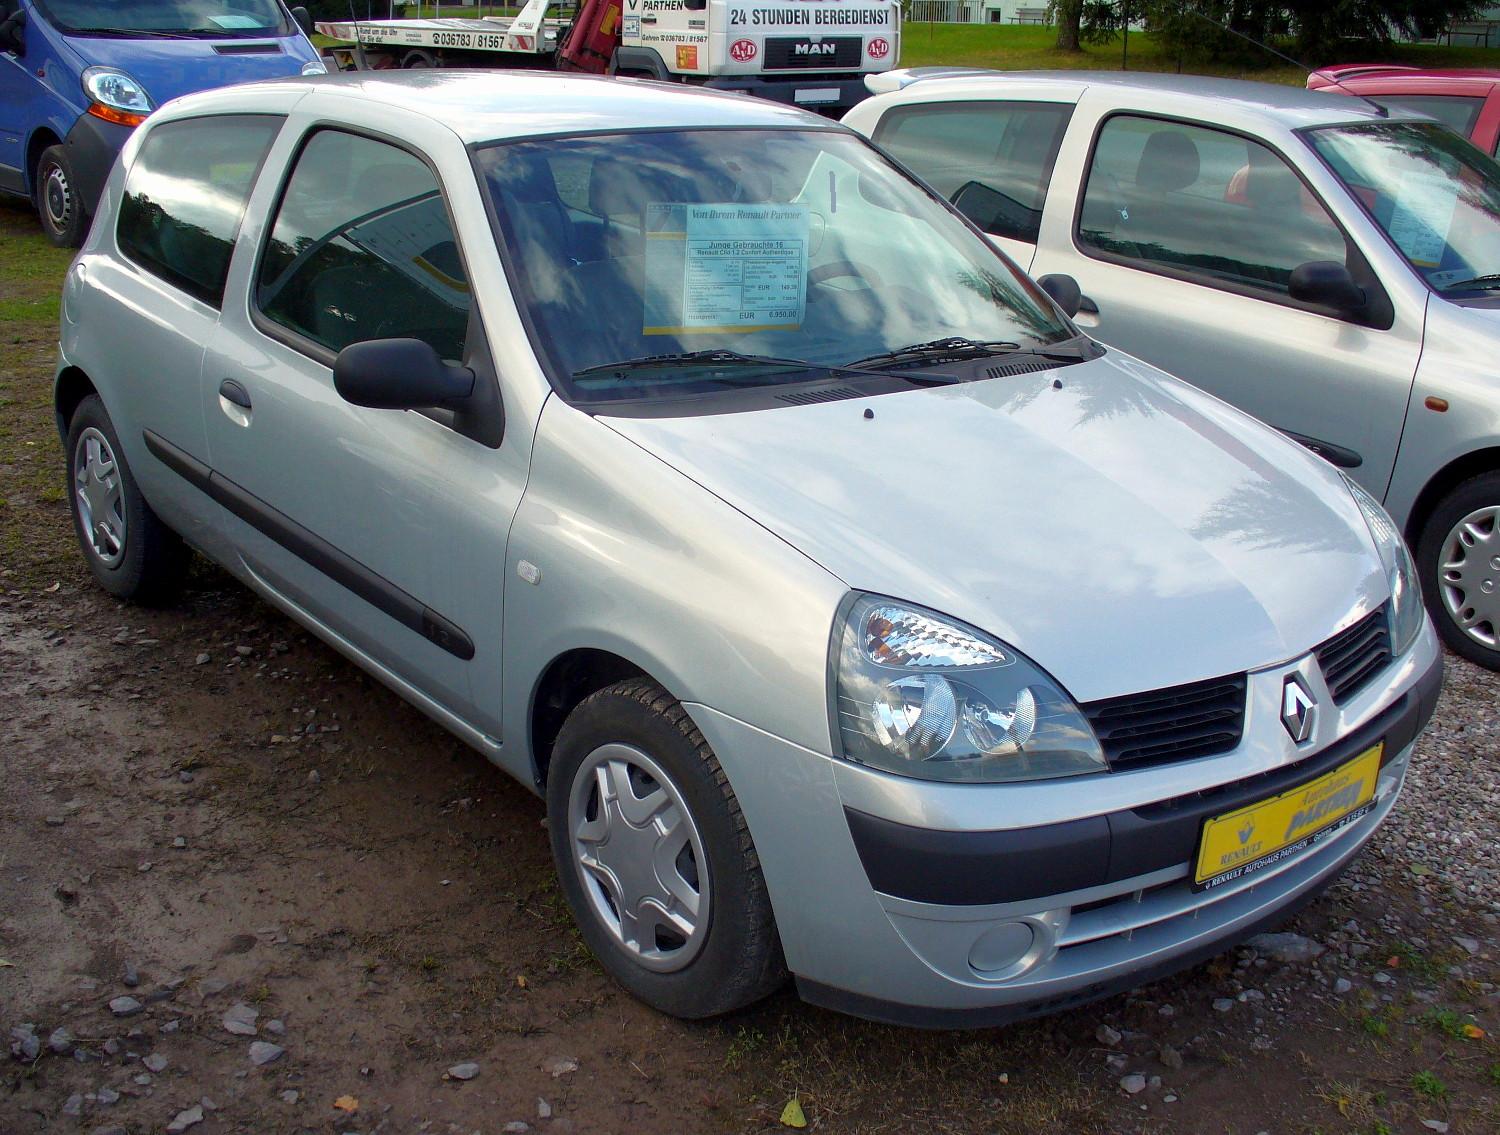 File:1999 Renault Clio 5-door Radio 101 edition.jpg - Wikipedia